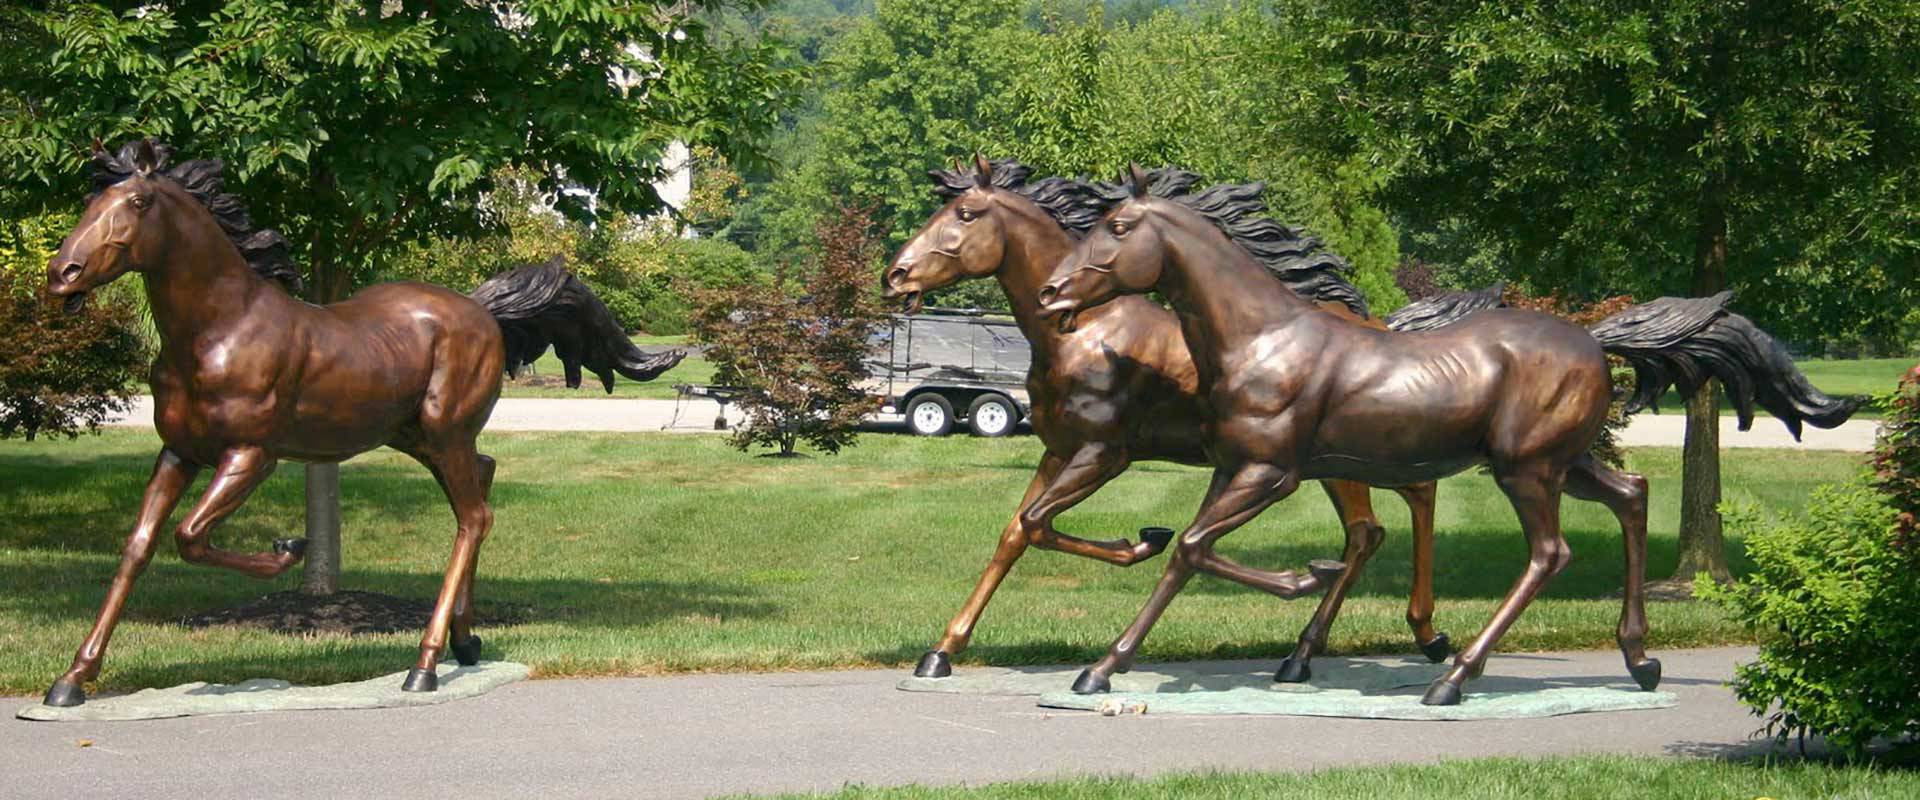 3 horse bronze sculpture